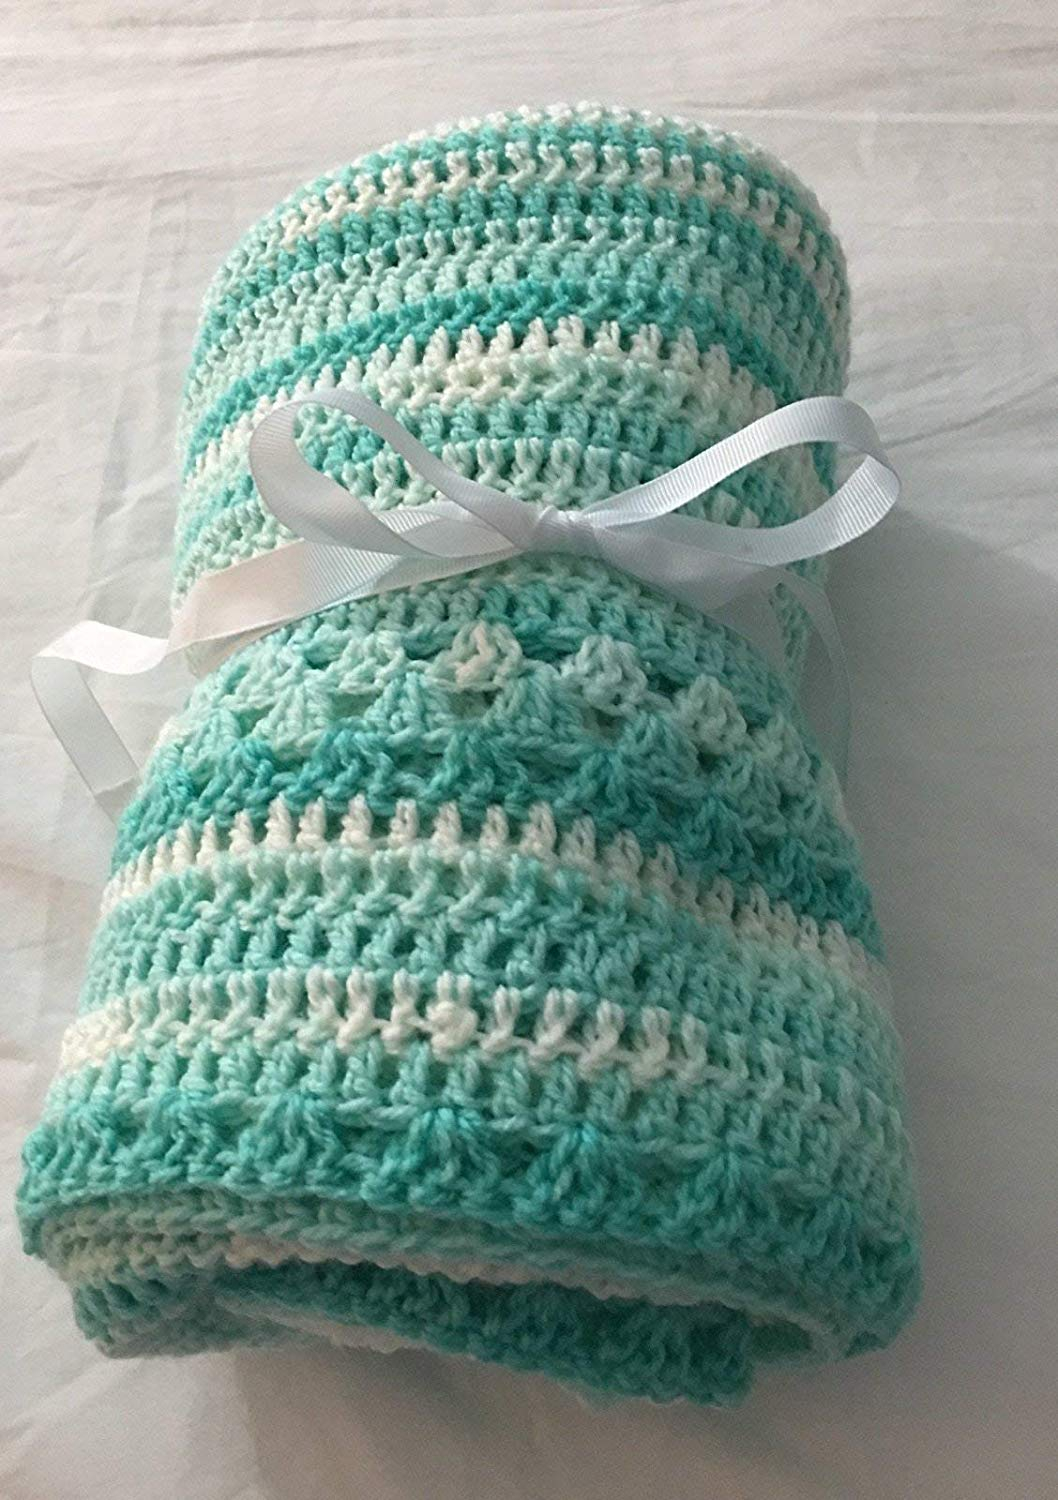 Baby Boy Crochet Blanket Patterns Cheap Ba Crochet Blanket Patterns Find Ba Crochet Blanket